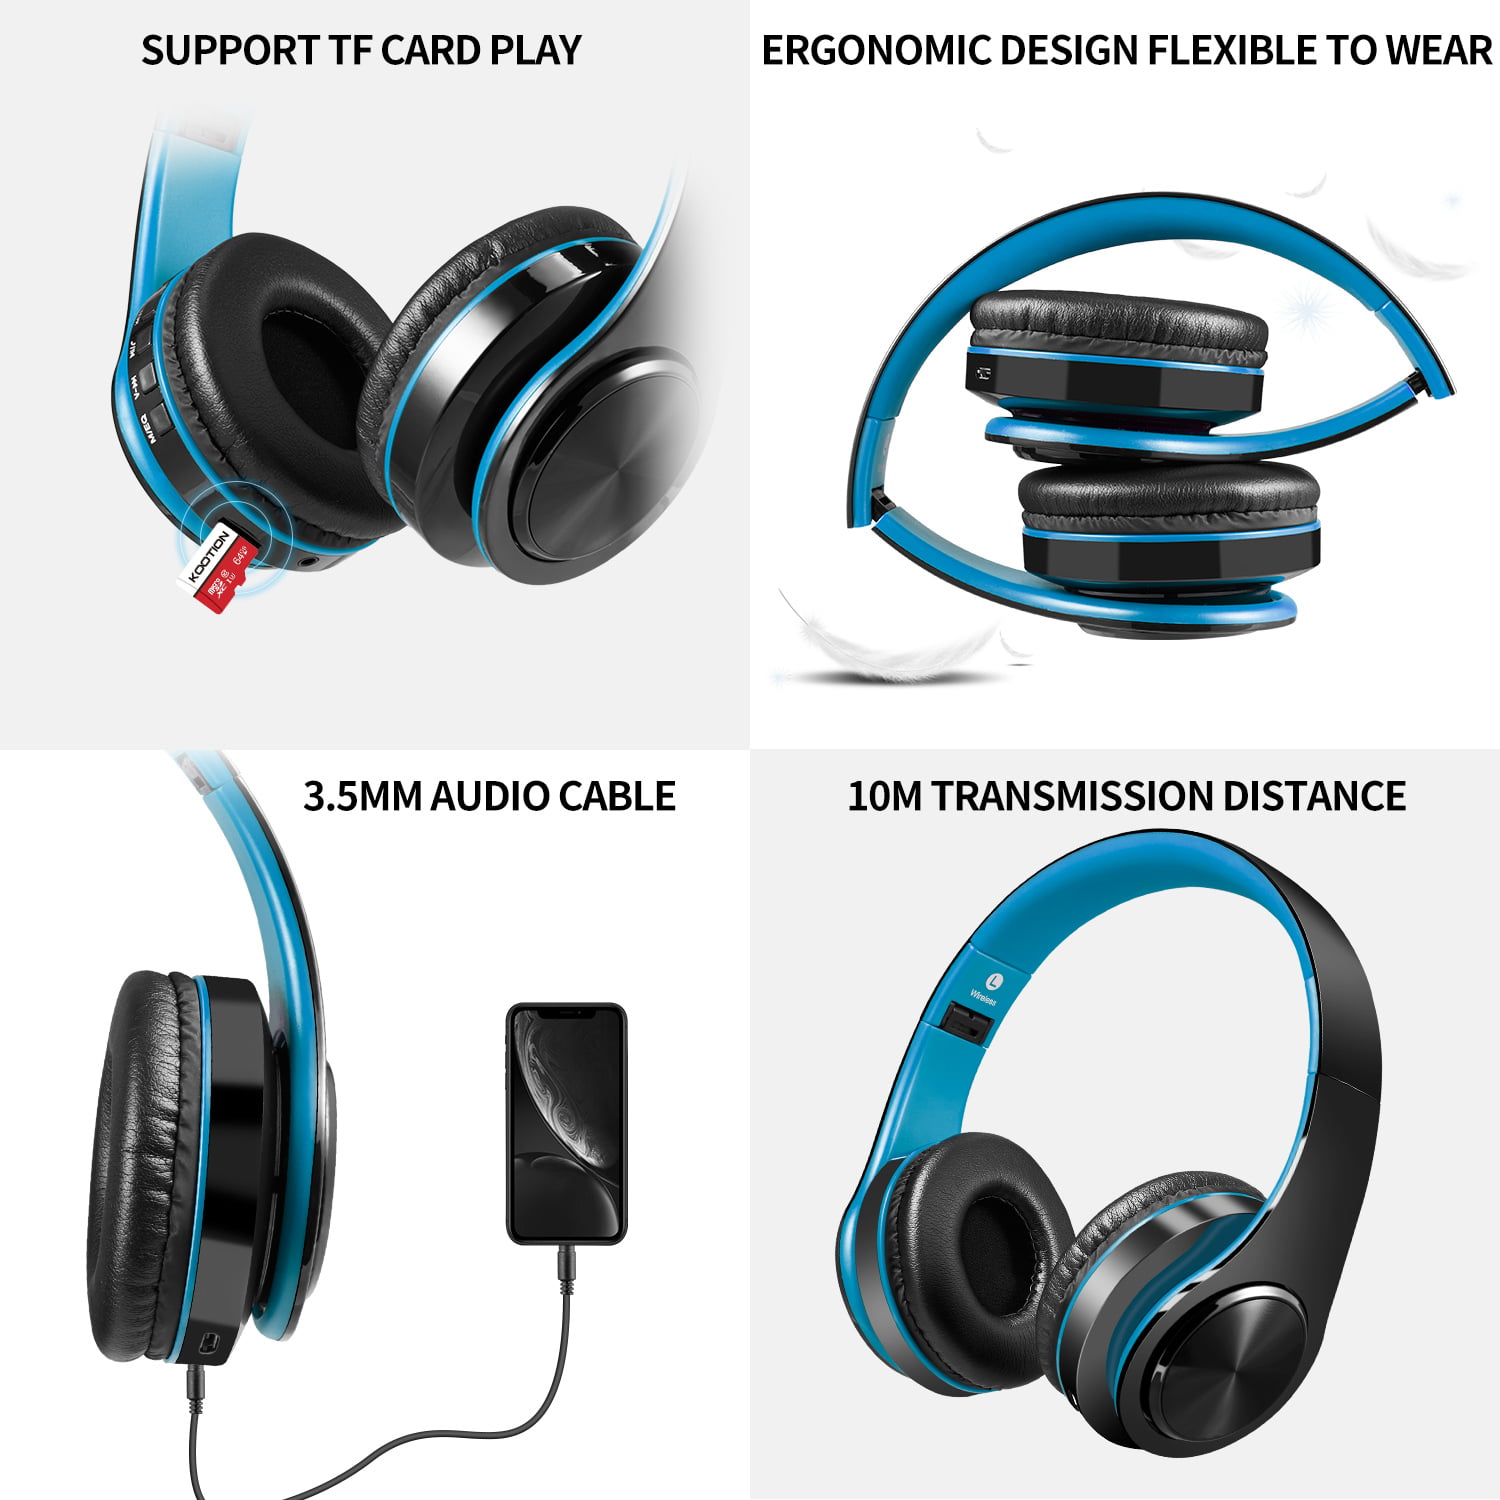 Hi-Fi Bluetooth Over-Ear Wireless Headphones (Blue)